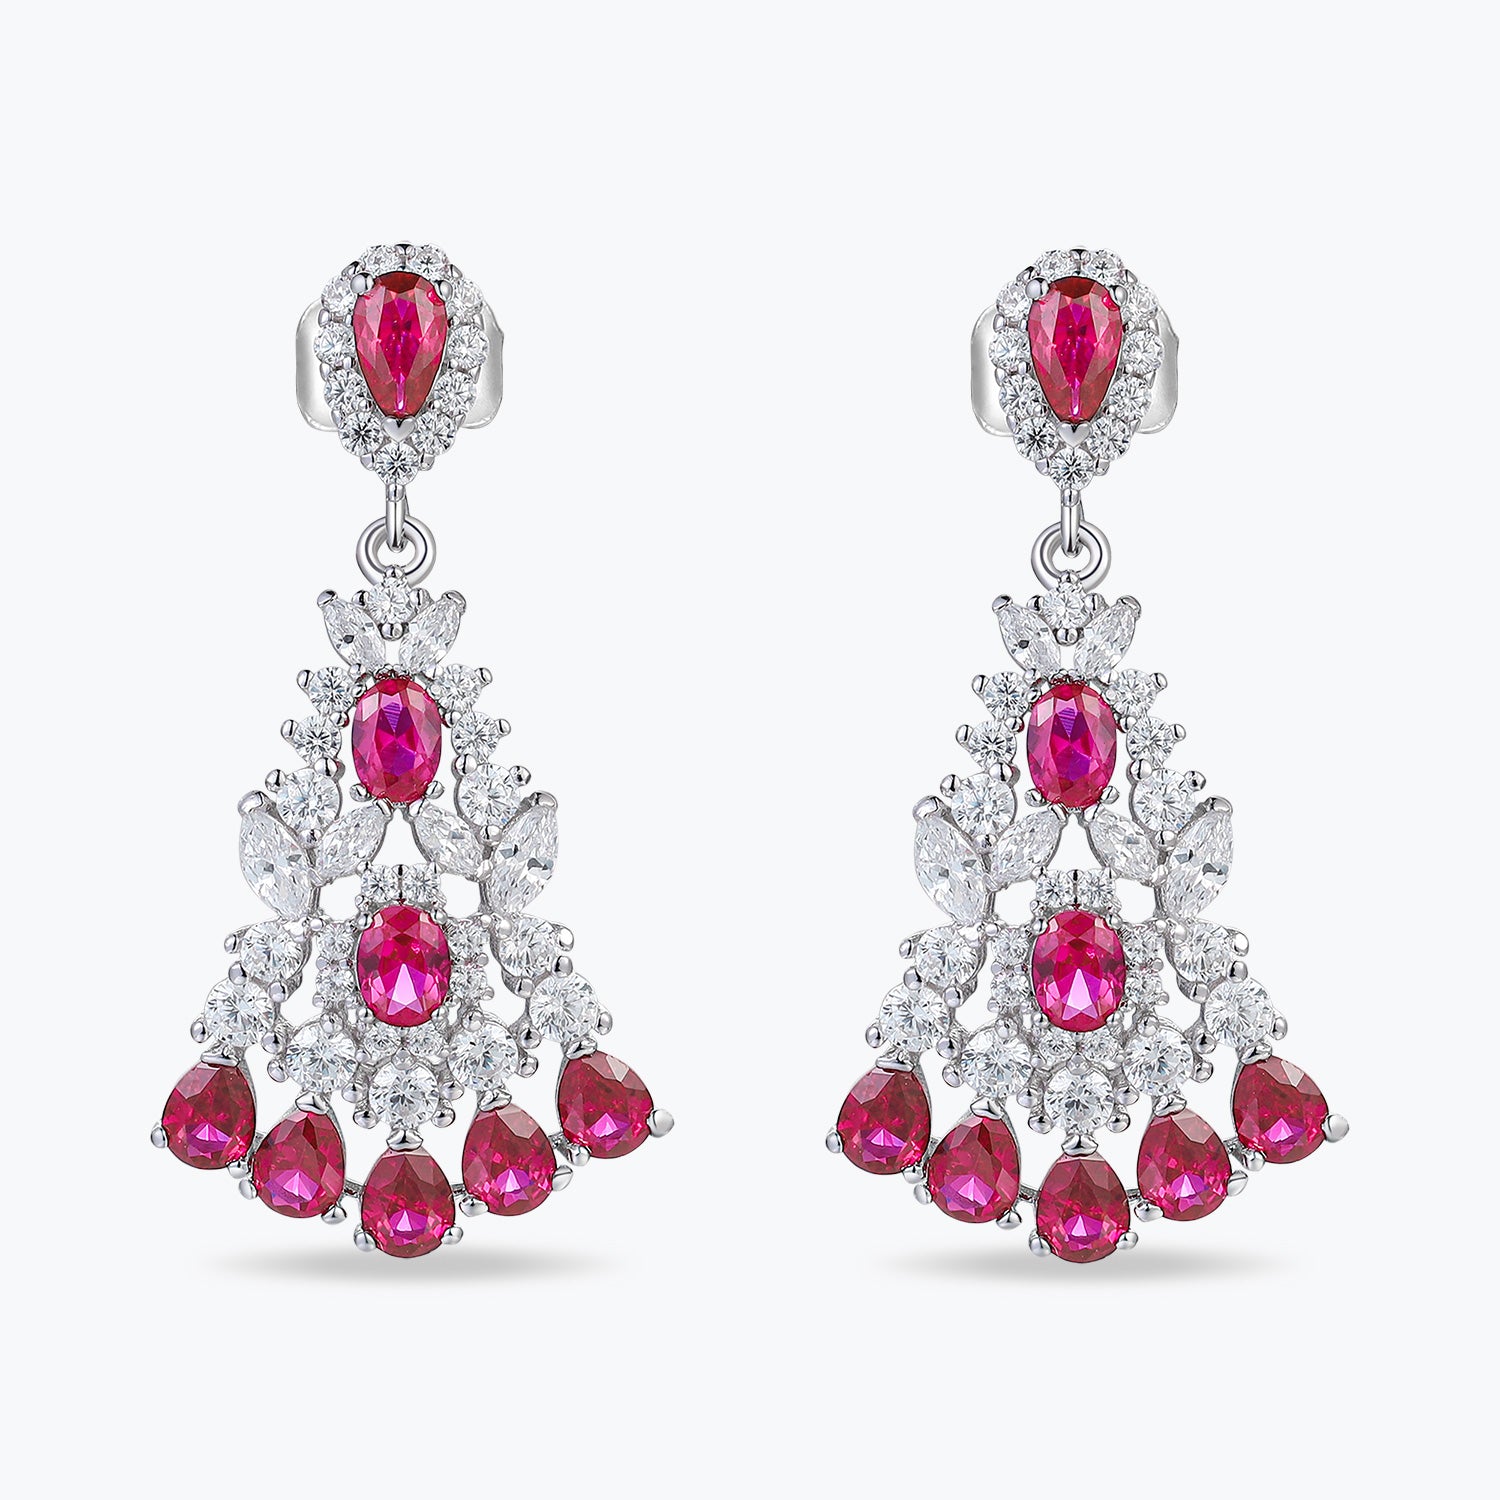 Dissoo® Vintage Ruby Red & White Chandelier Earrings